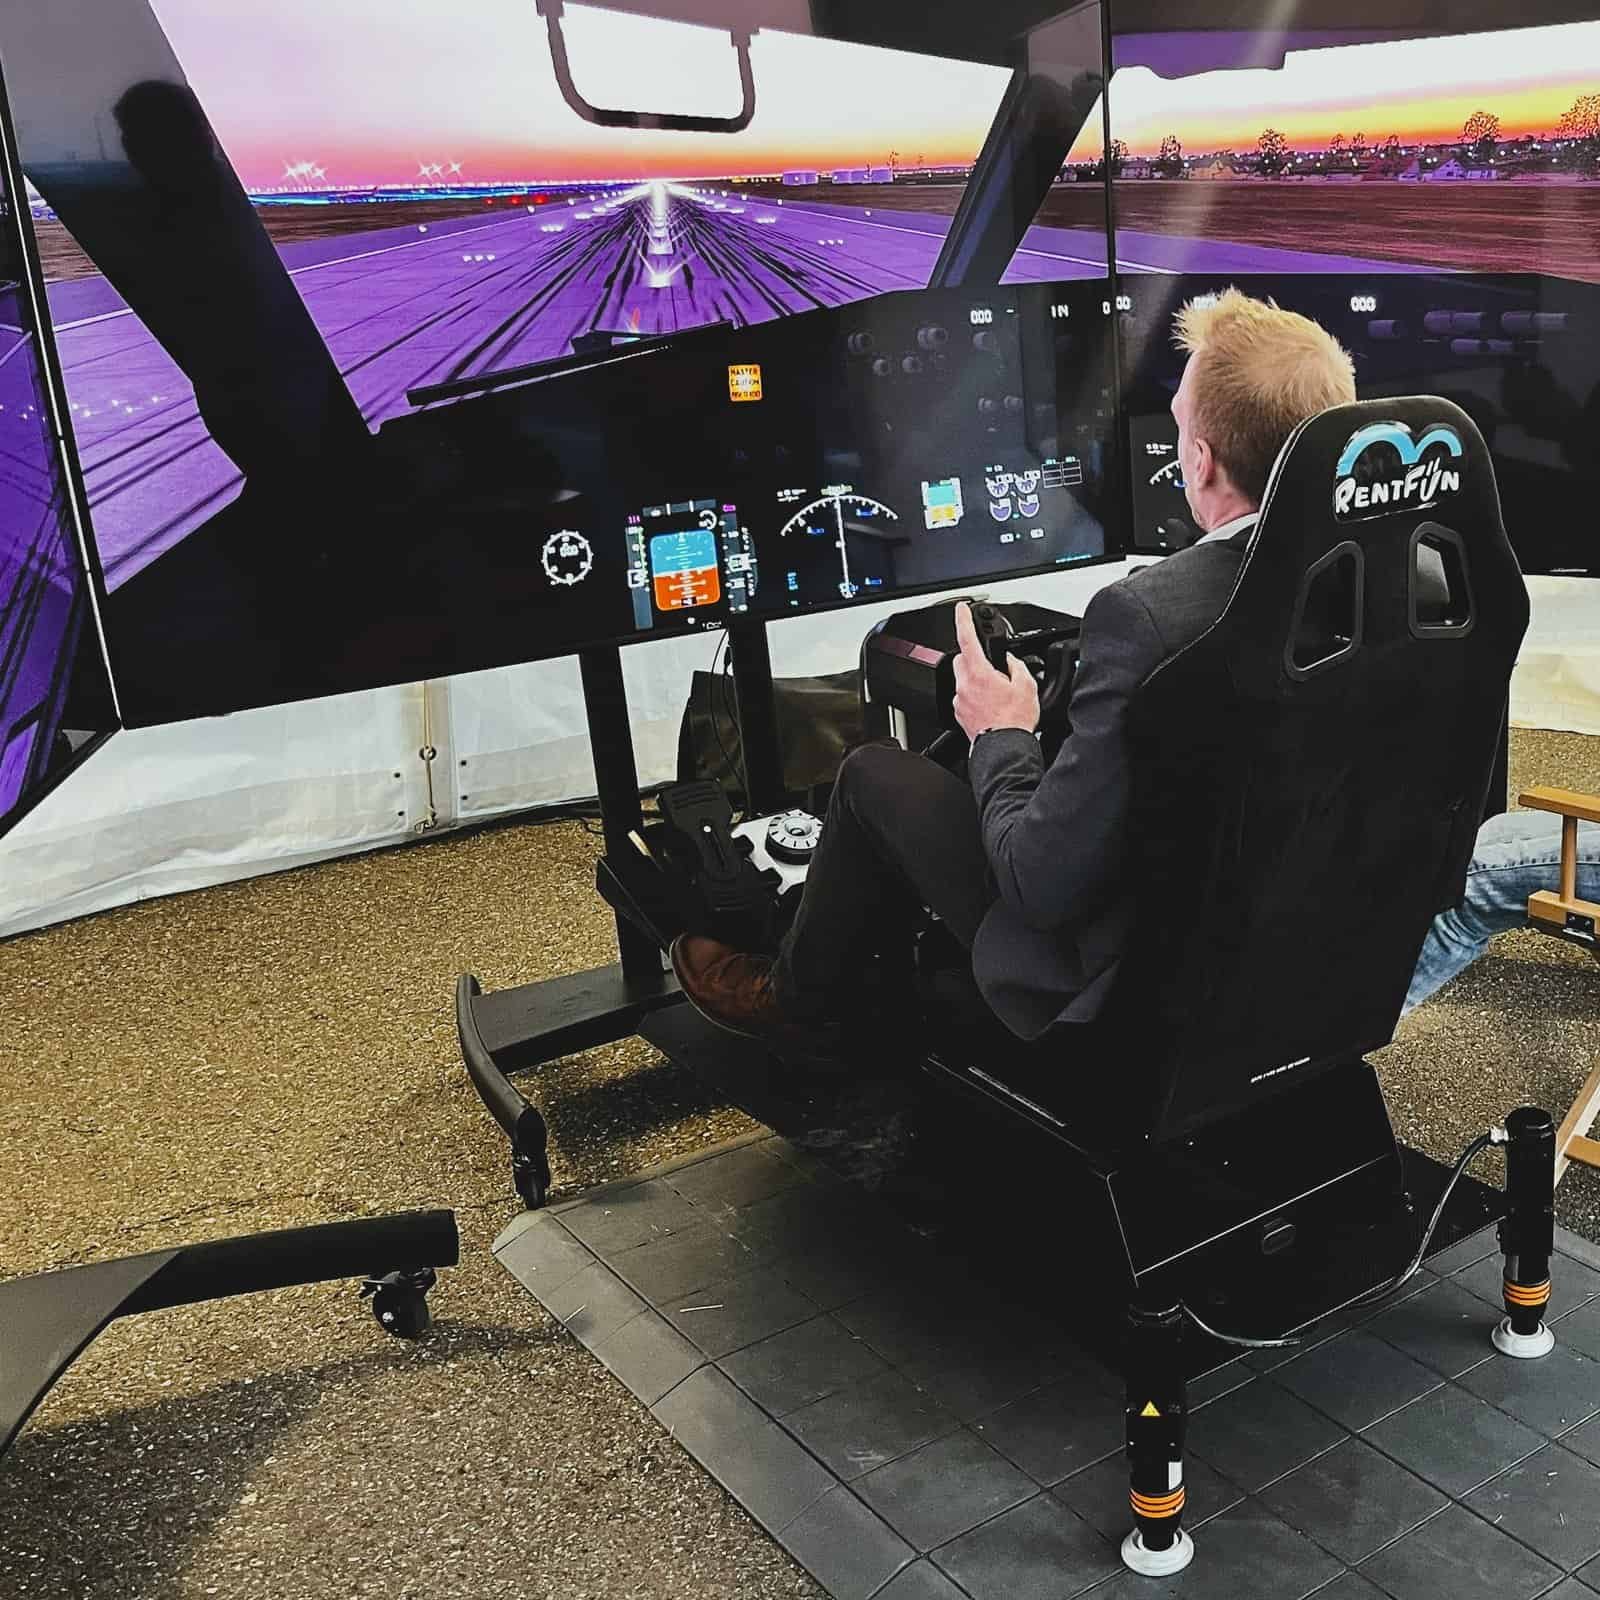 Flight Simulator rental in UK London. Rent flight simulators for company event with support